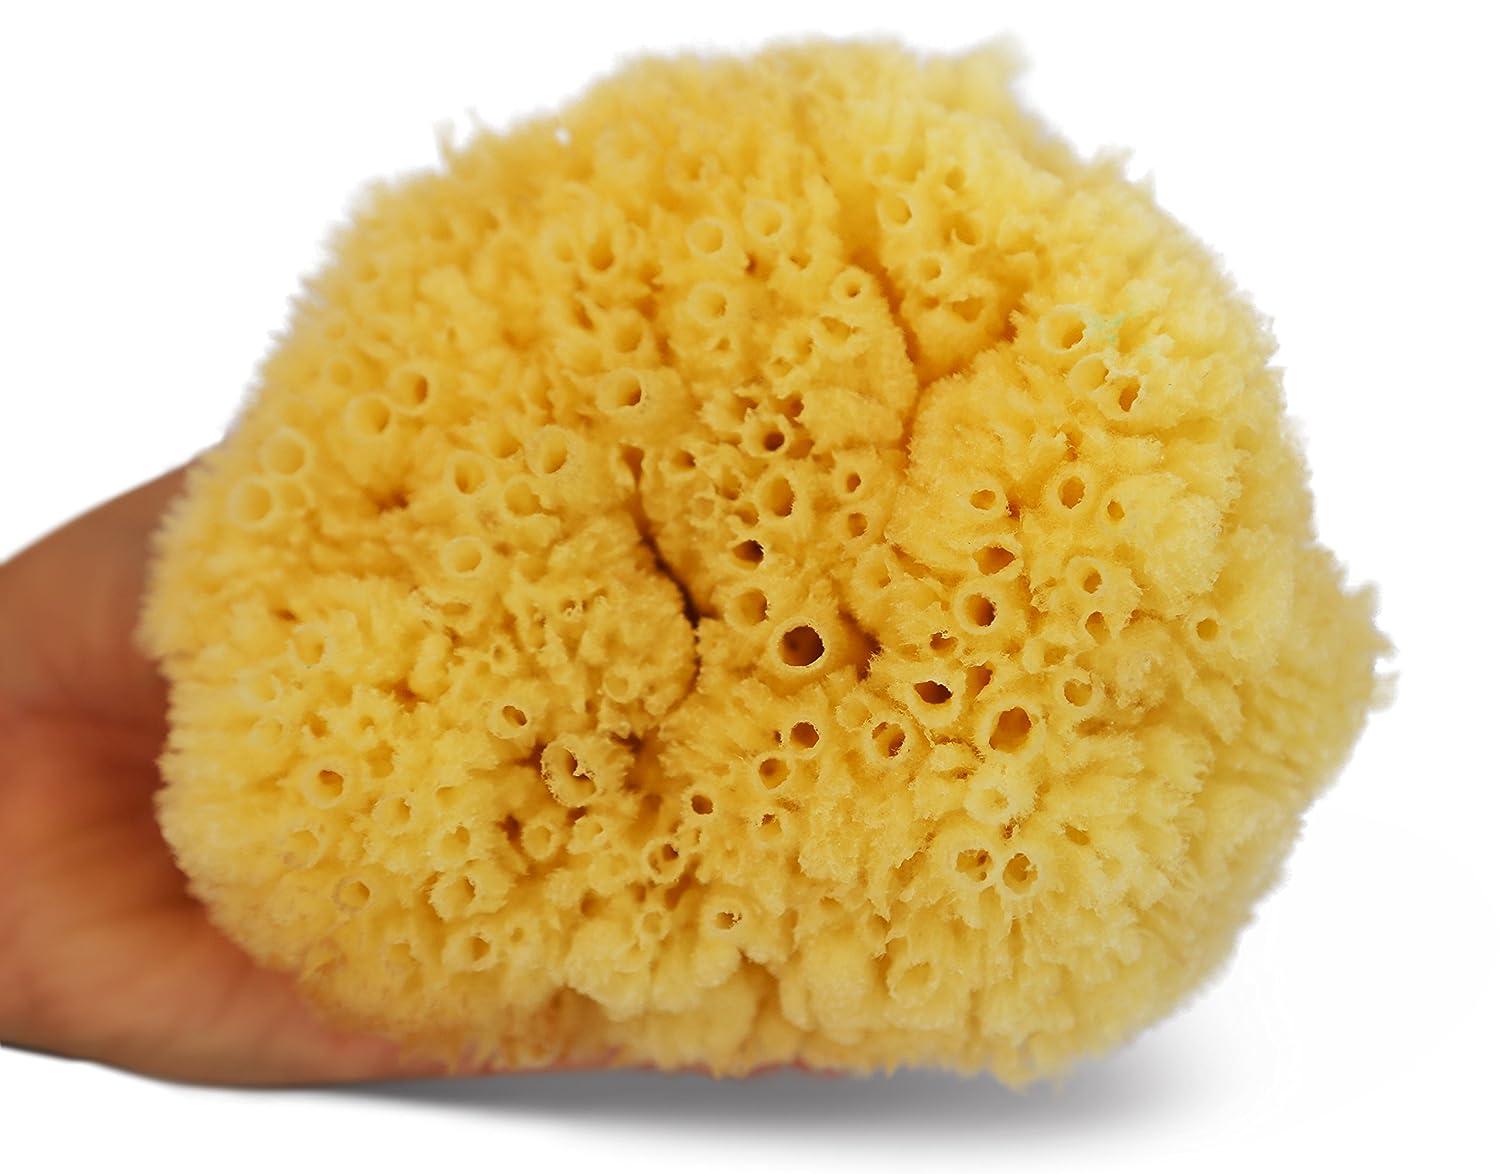 Real Natural Sea Sponges Multipack - 5pc Spa Gift Set in Premium Bag, Kind  on Skin, For Bath Shower Facial Cleansing, Pamper Moms Brides Girlfriends 